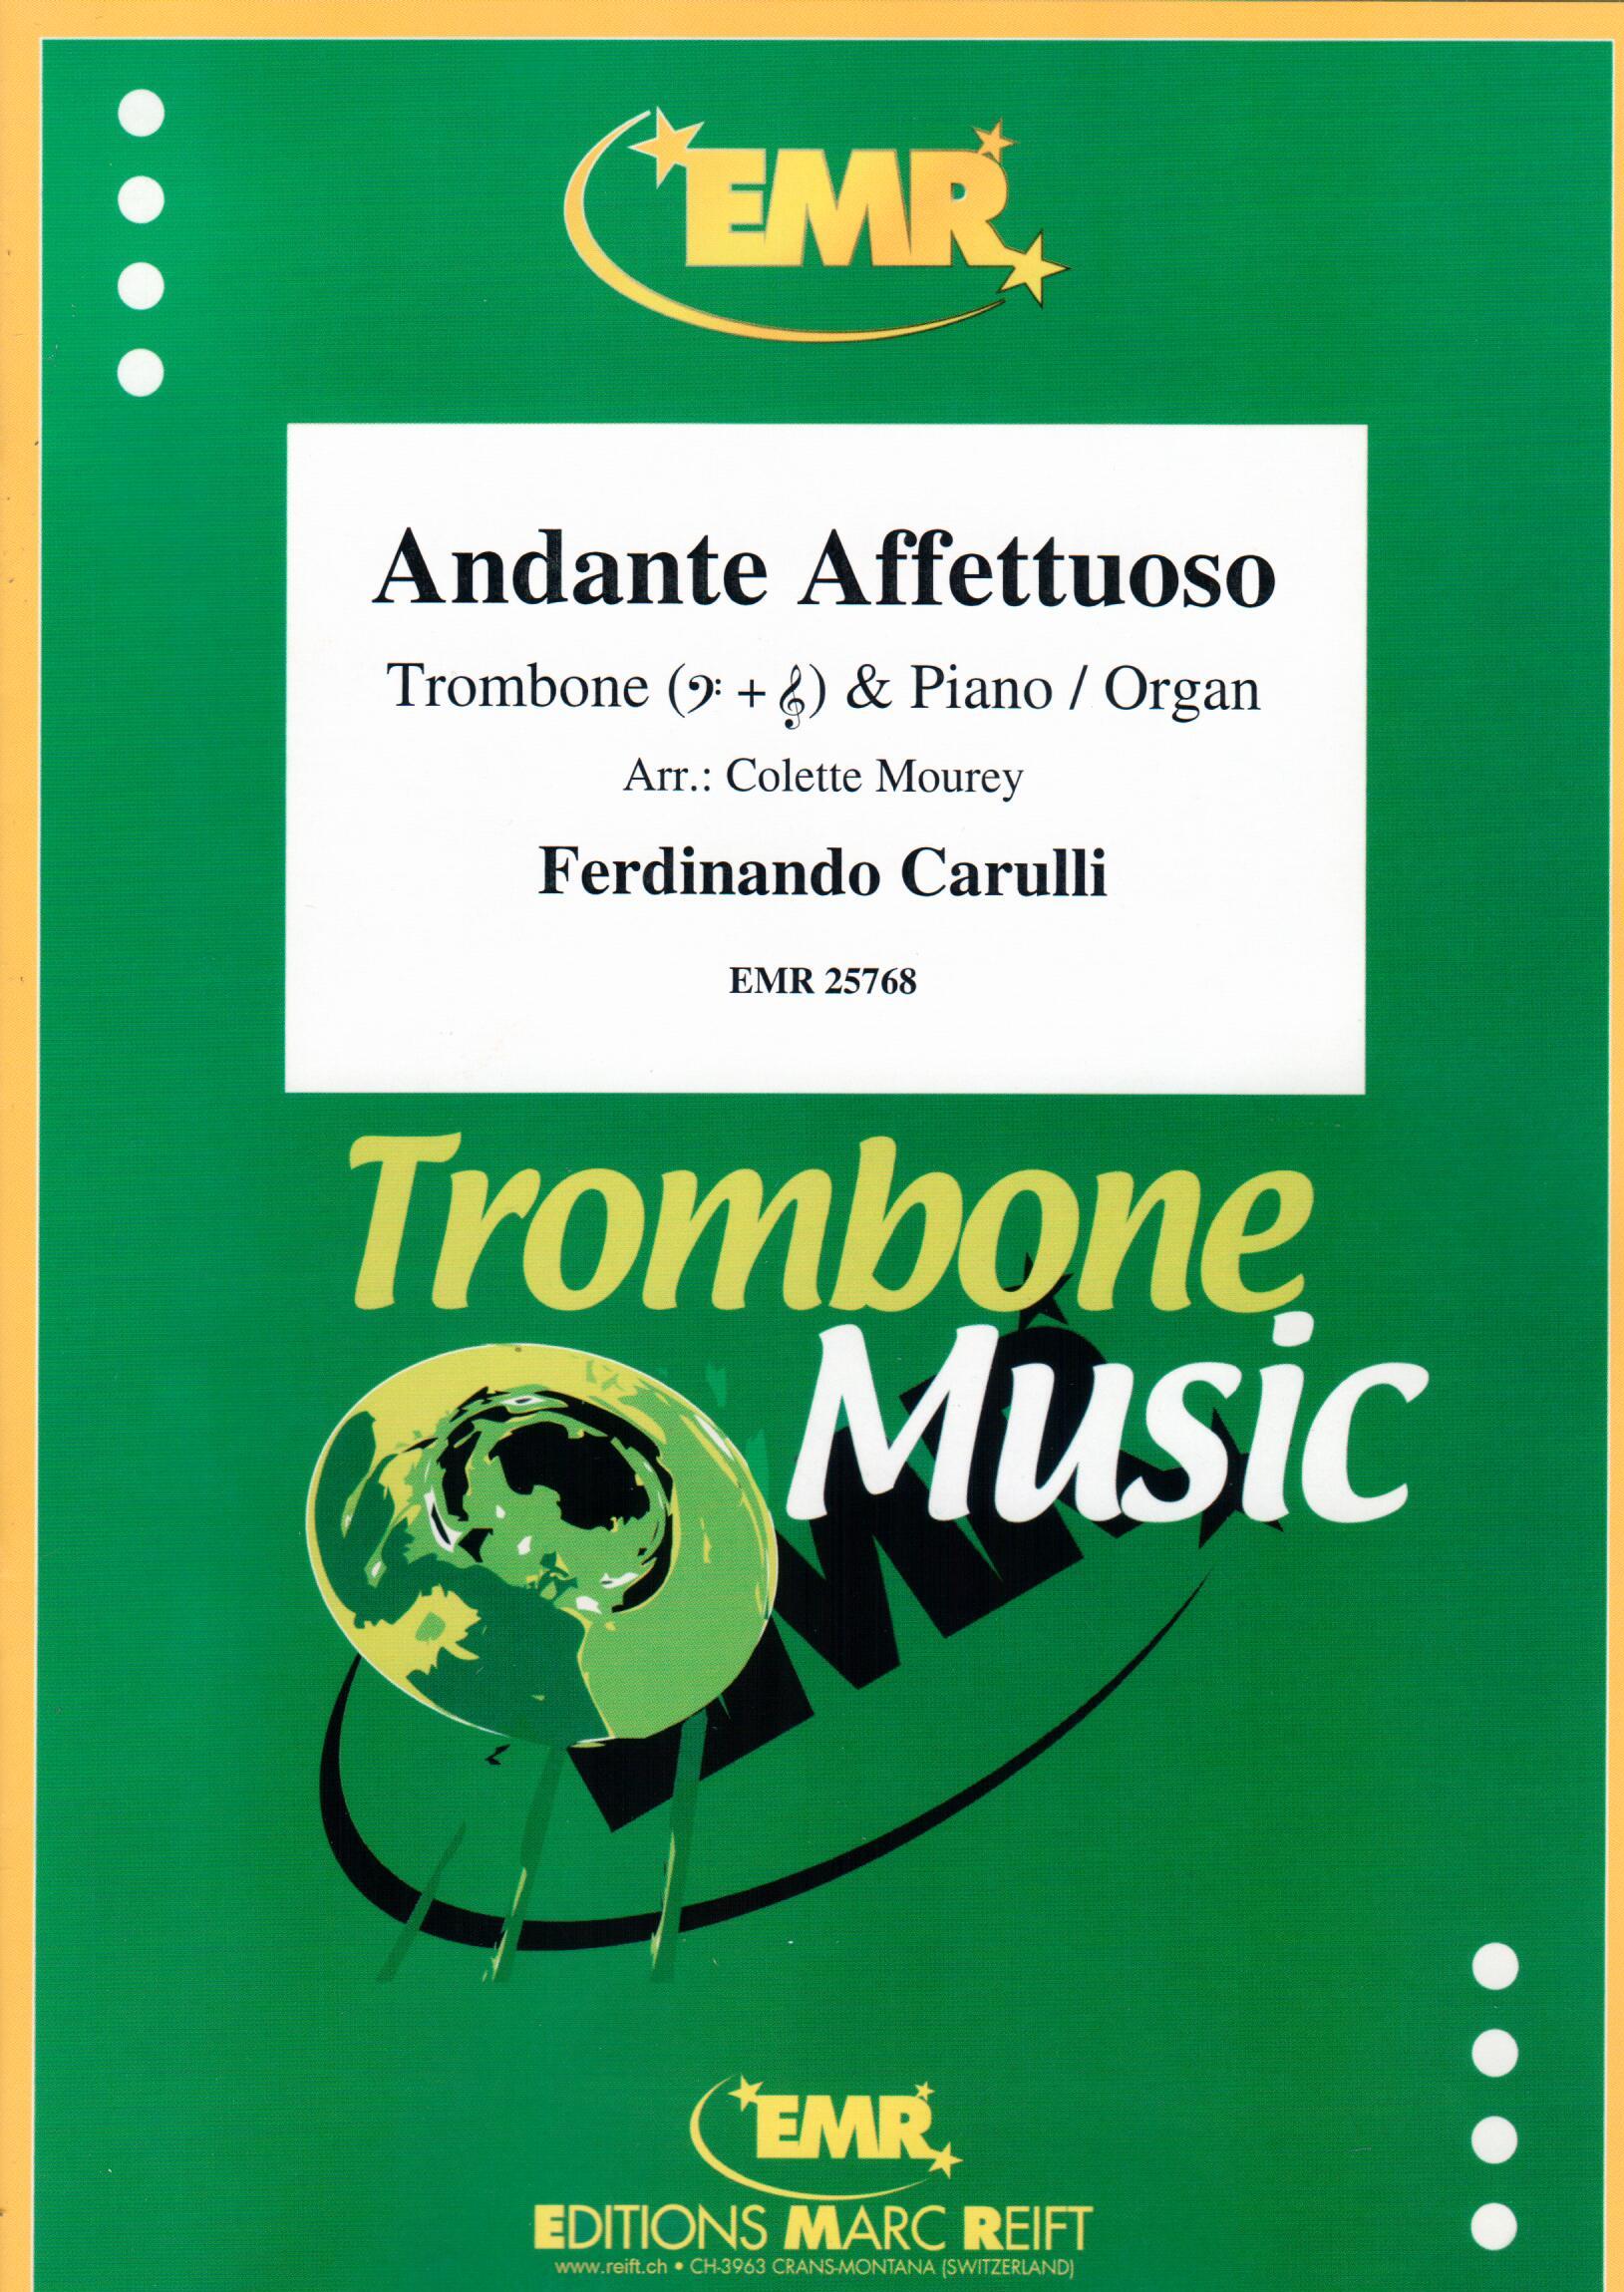 ANDANTE AFFETTUOSO, SOLOS - Trombone